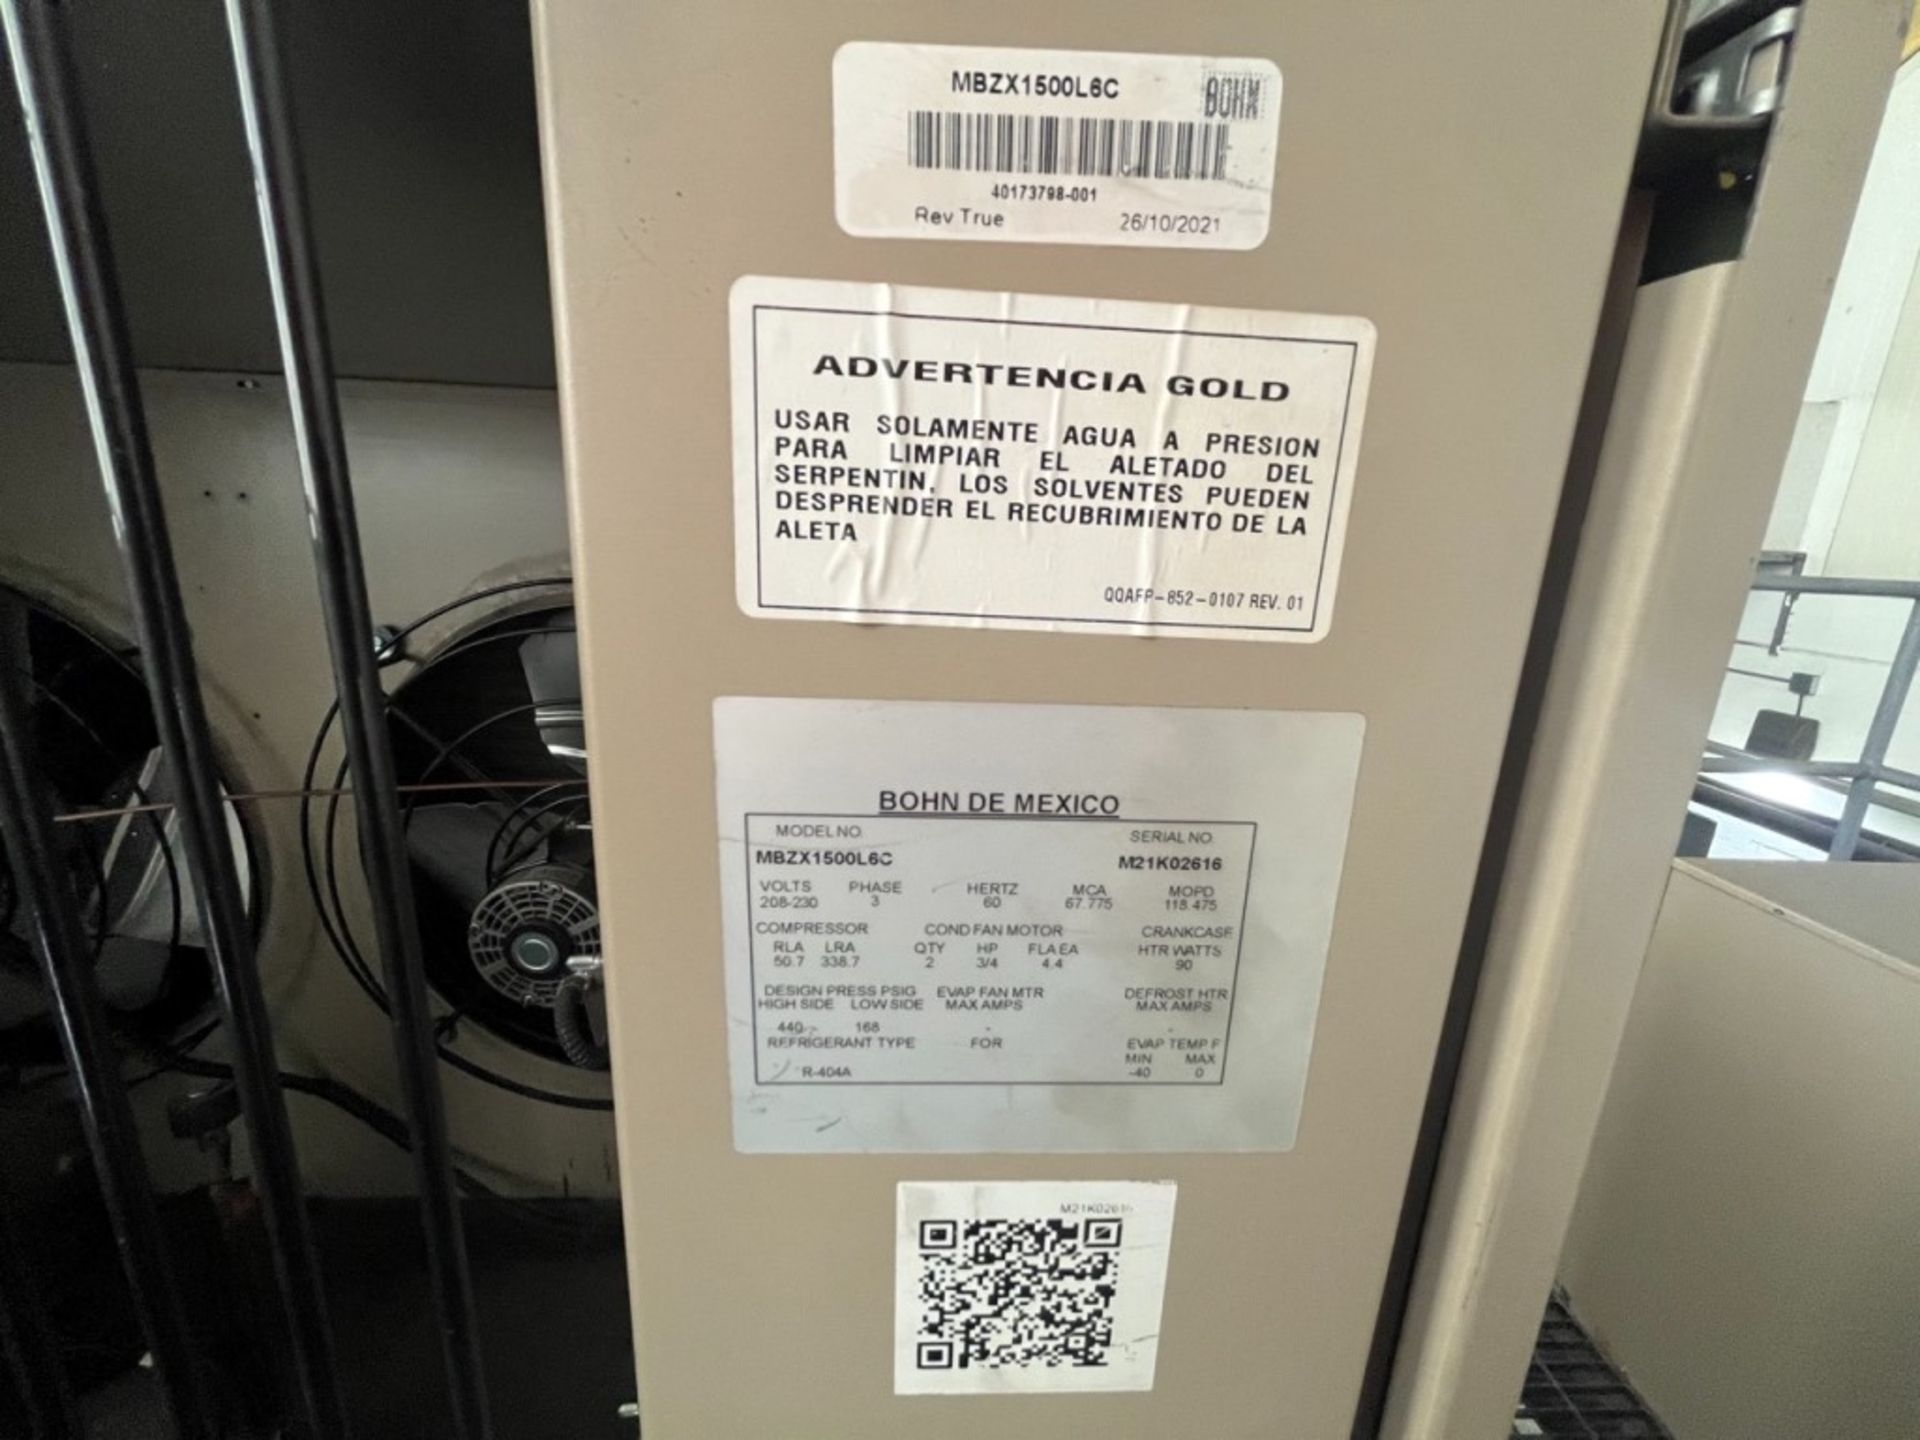 (NEW) Bohn refrigeration condensing unit, Model MBZX1500L6C, Serial No. M21K02616, 208-230V 60 Hz - Image 16 of 22